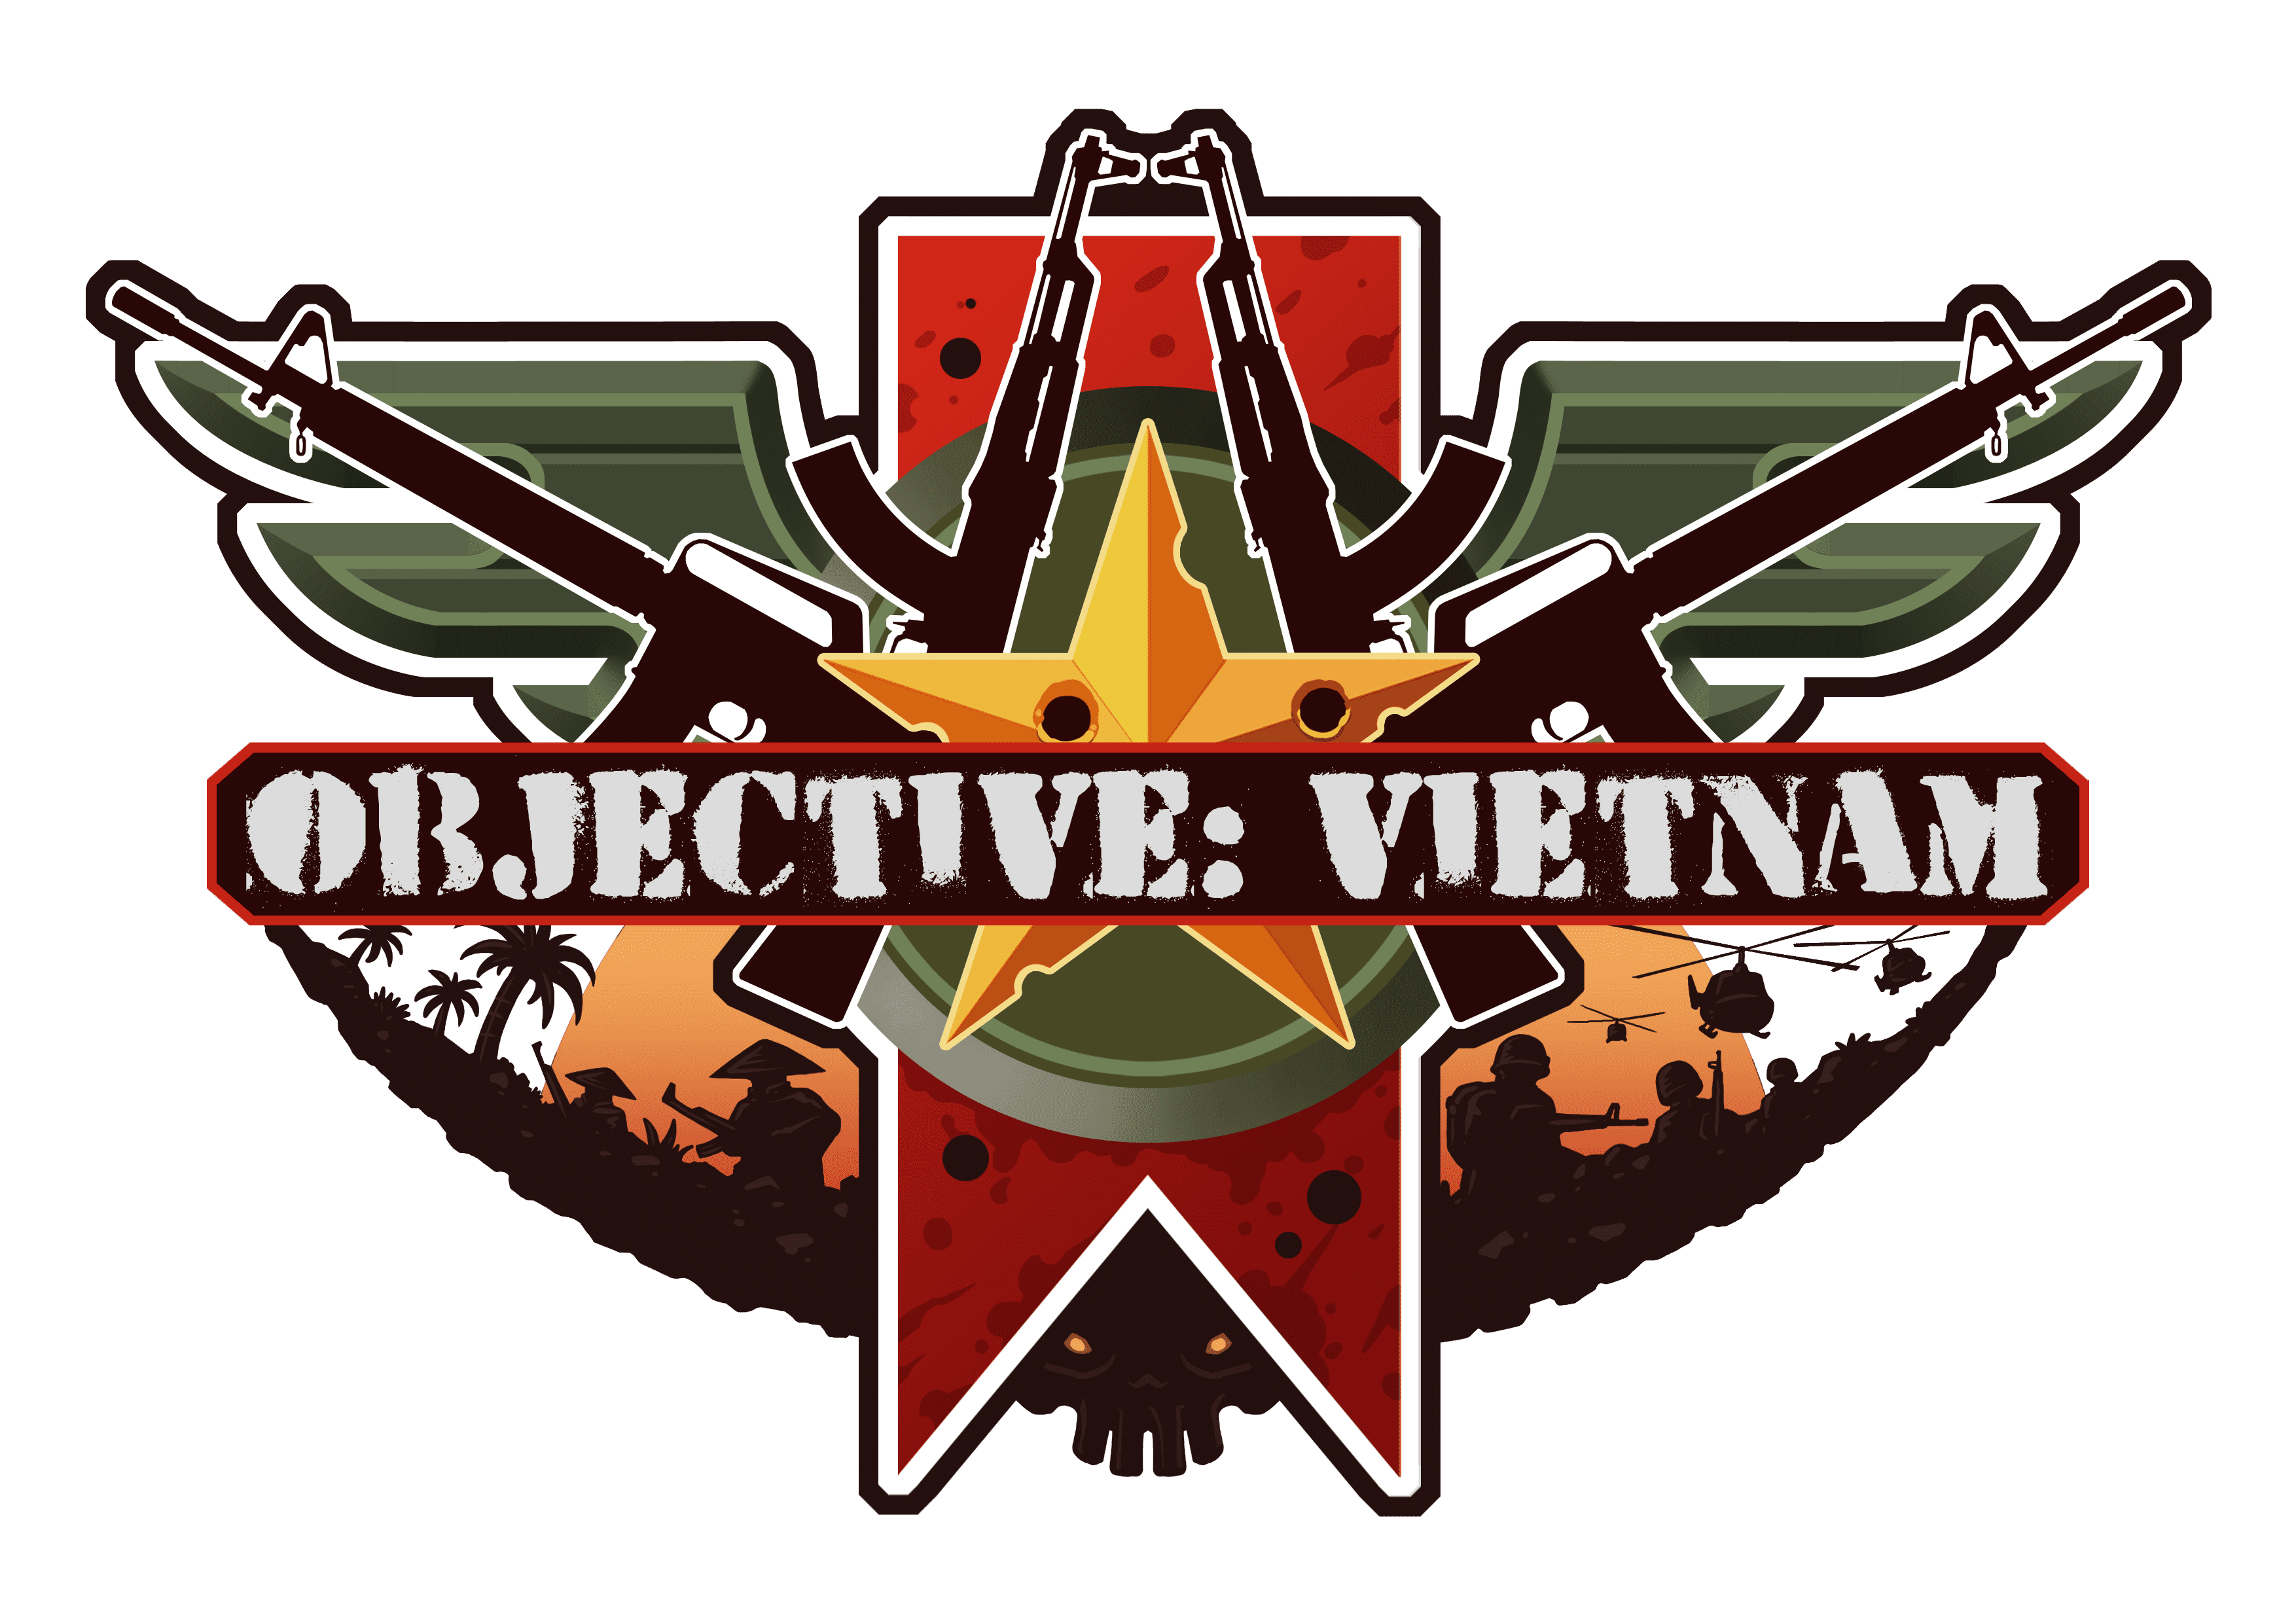 Objective: Vietnam